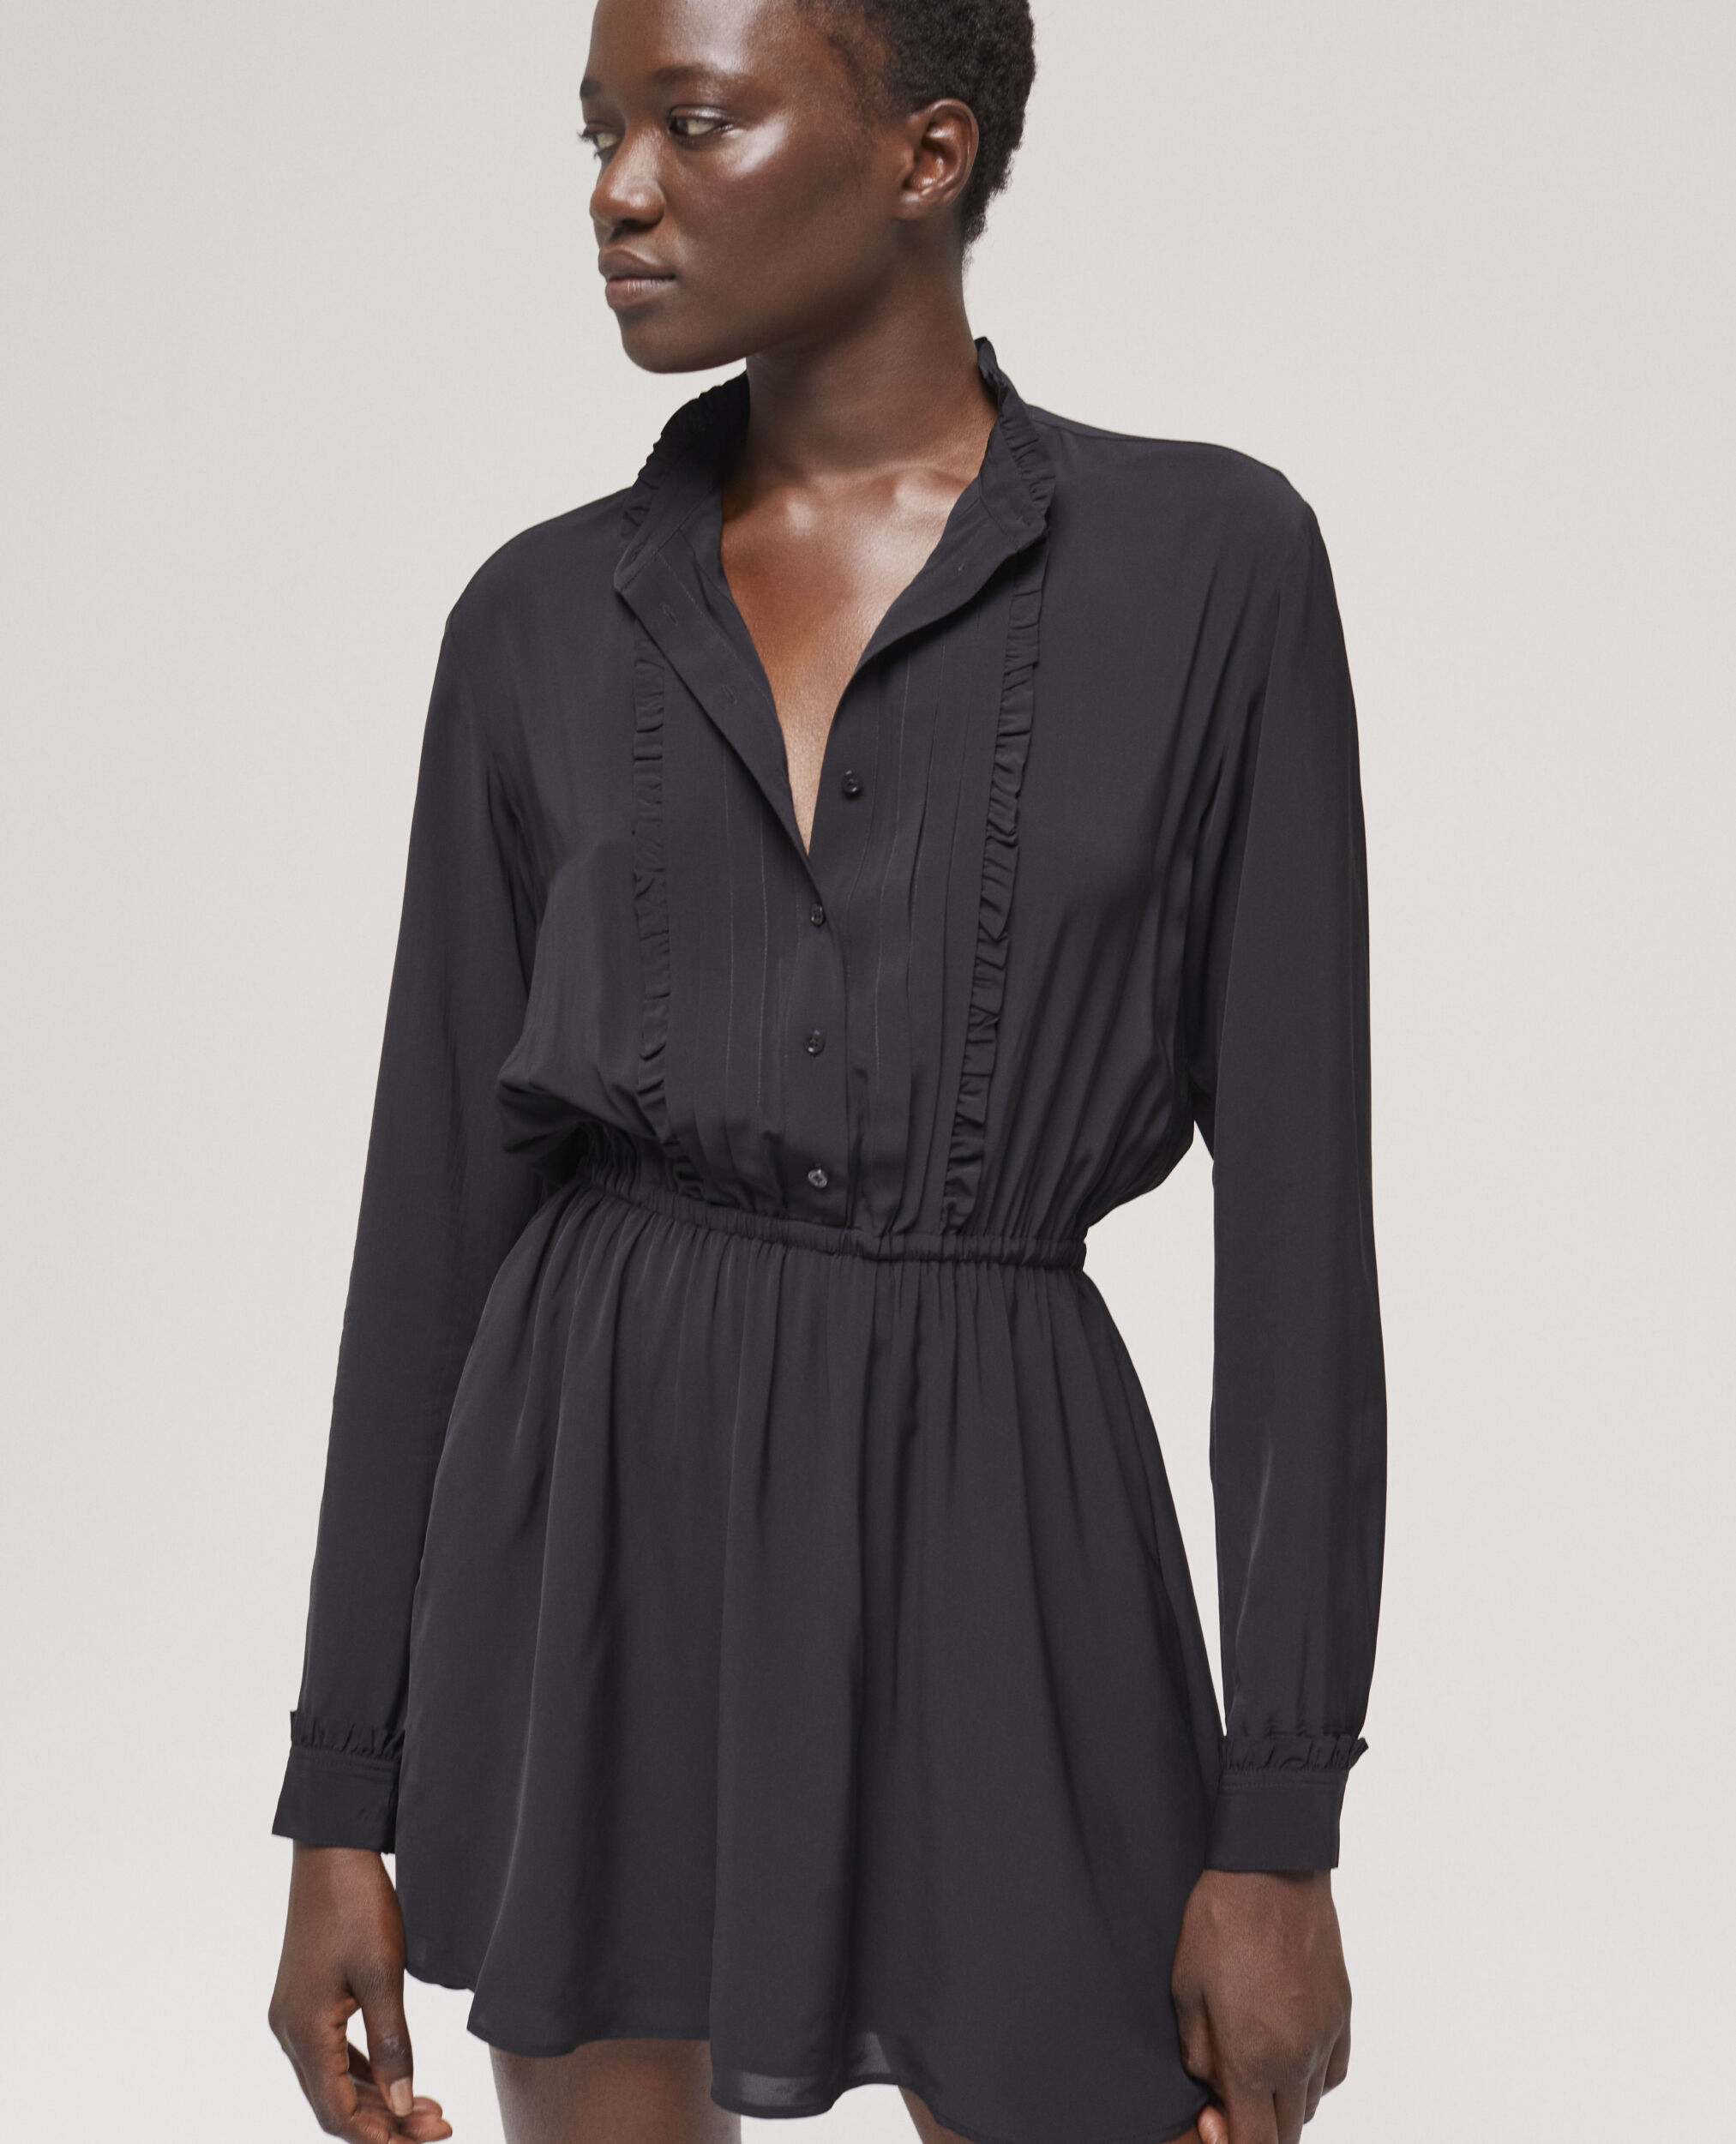 Short black dress with low neckline | The Kooples - US